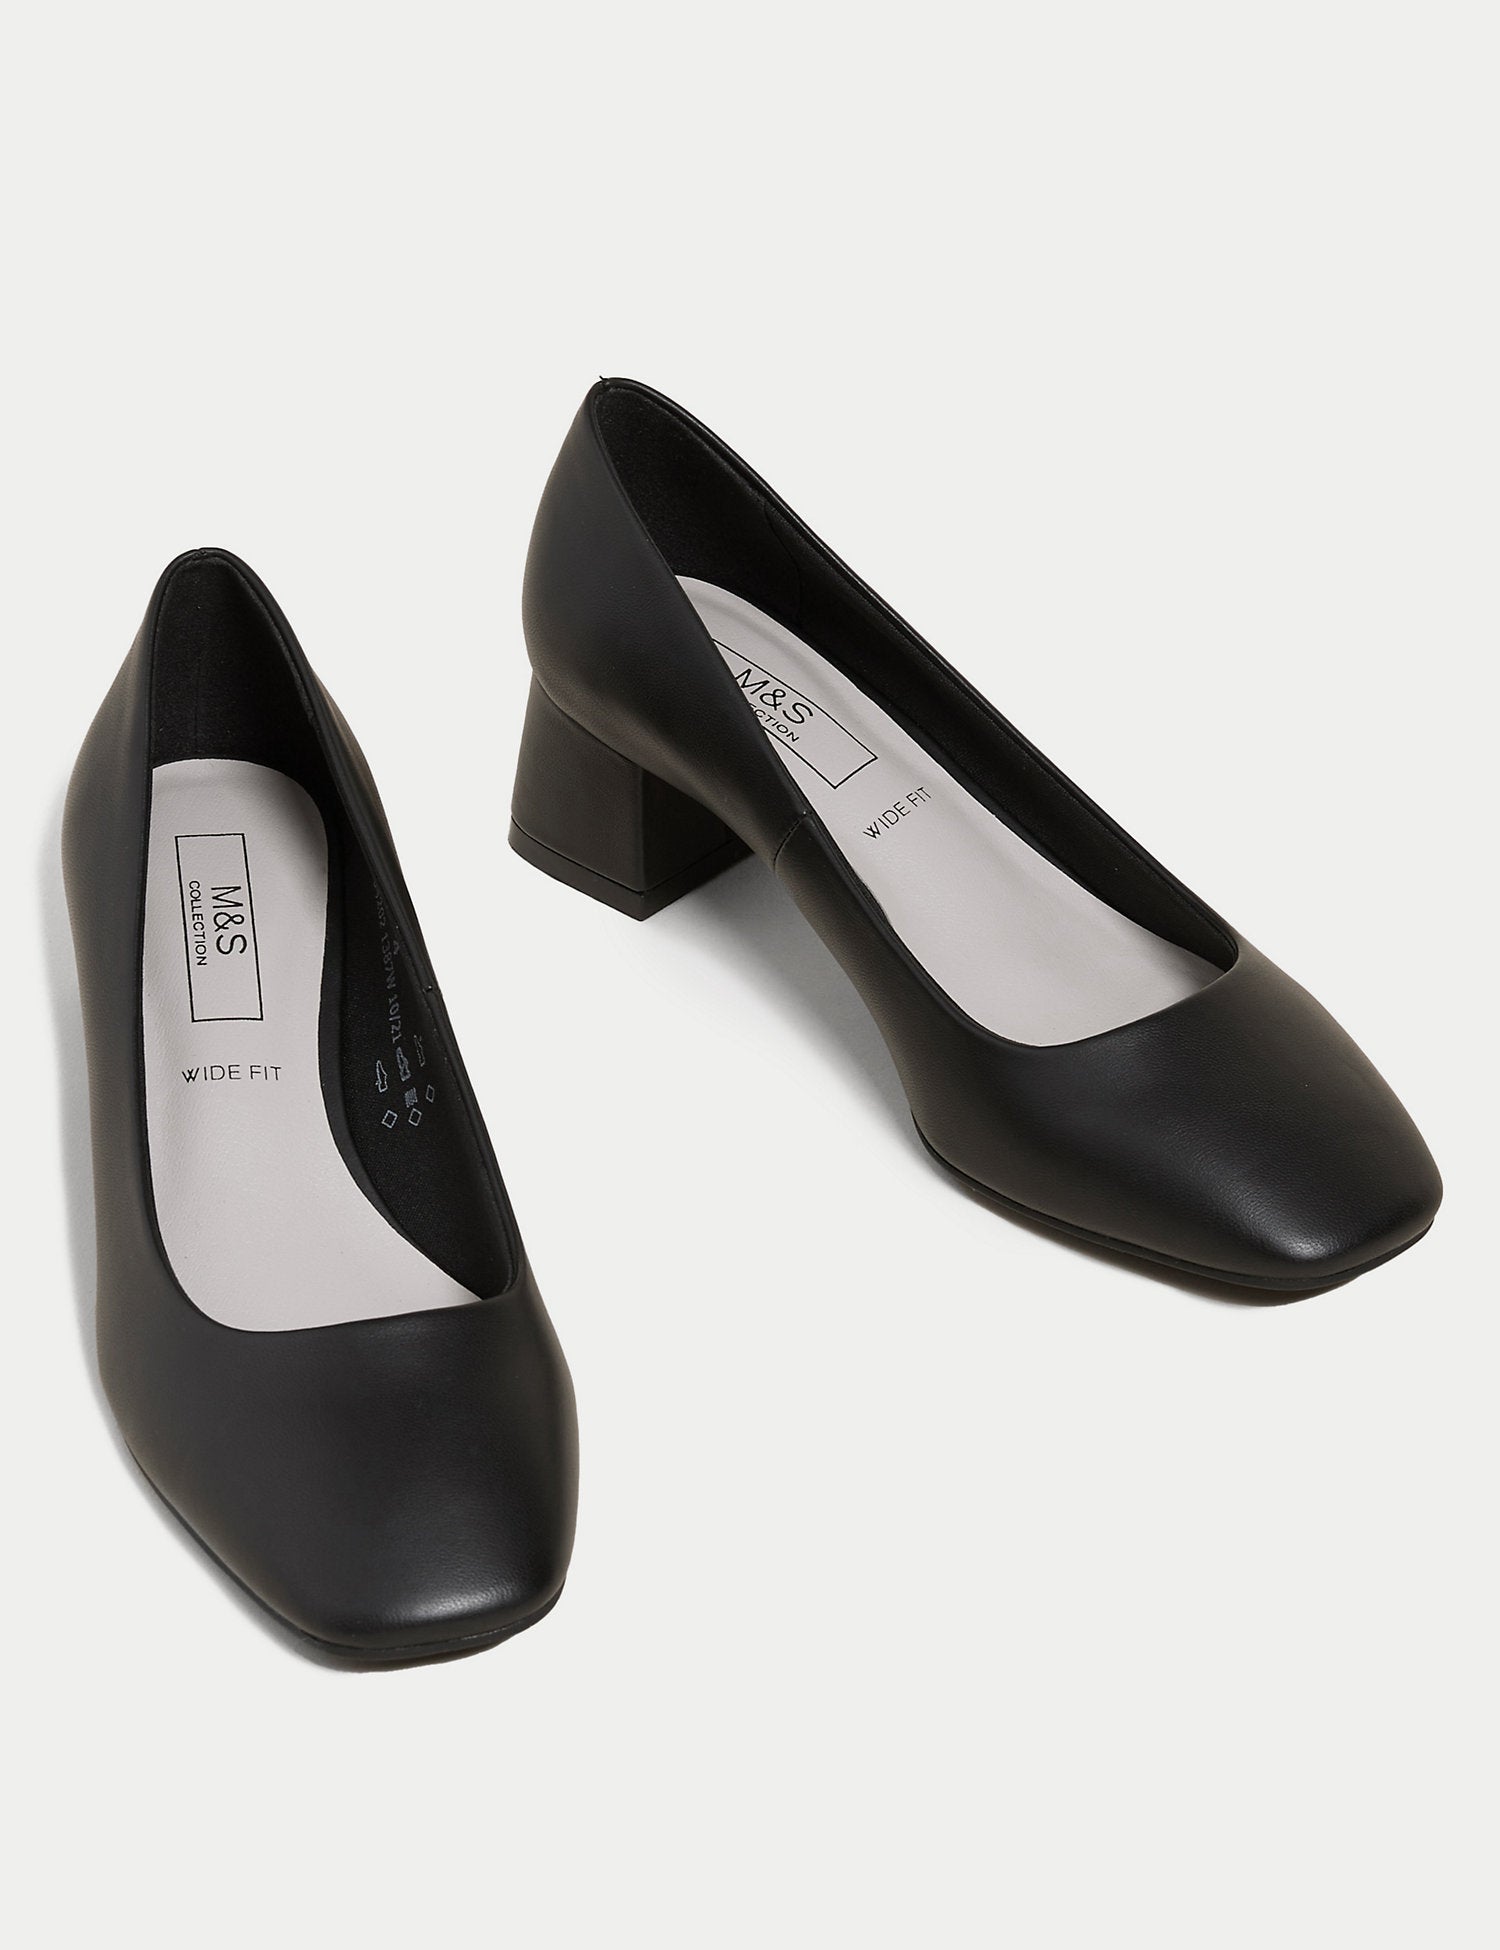 Plain Black 1inch Ladies High Heels Sandal at Rs 170/pair in New Delhi |  ID: 2851831596455